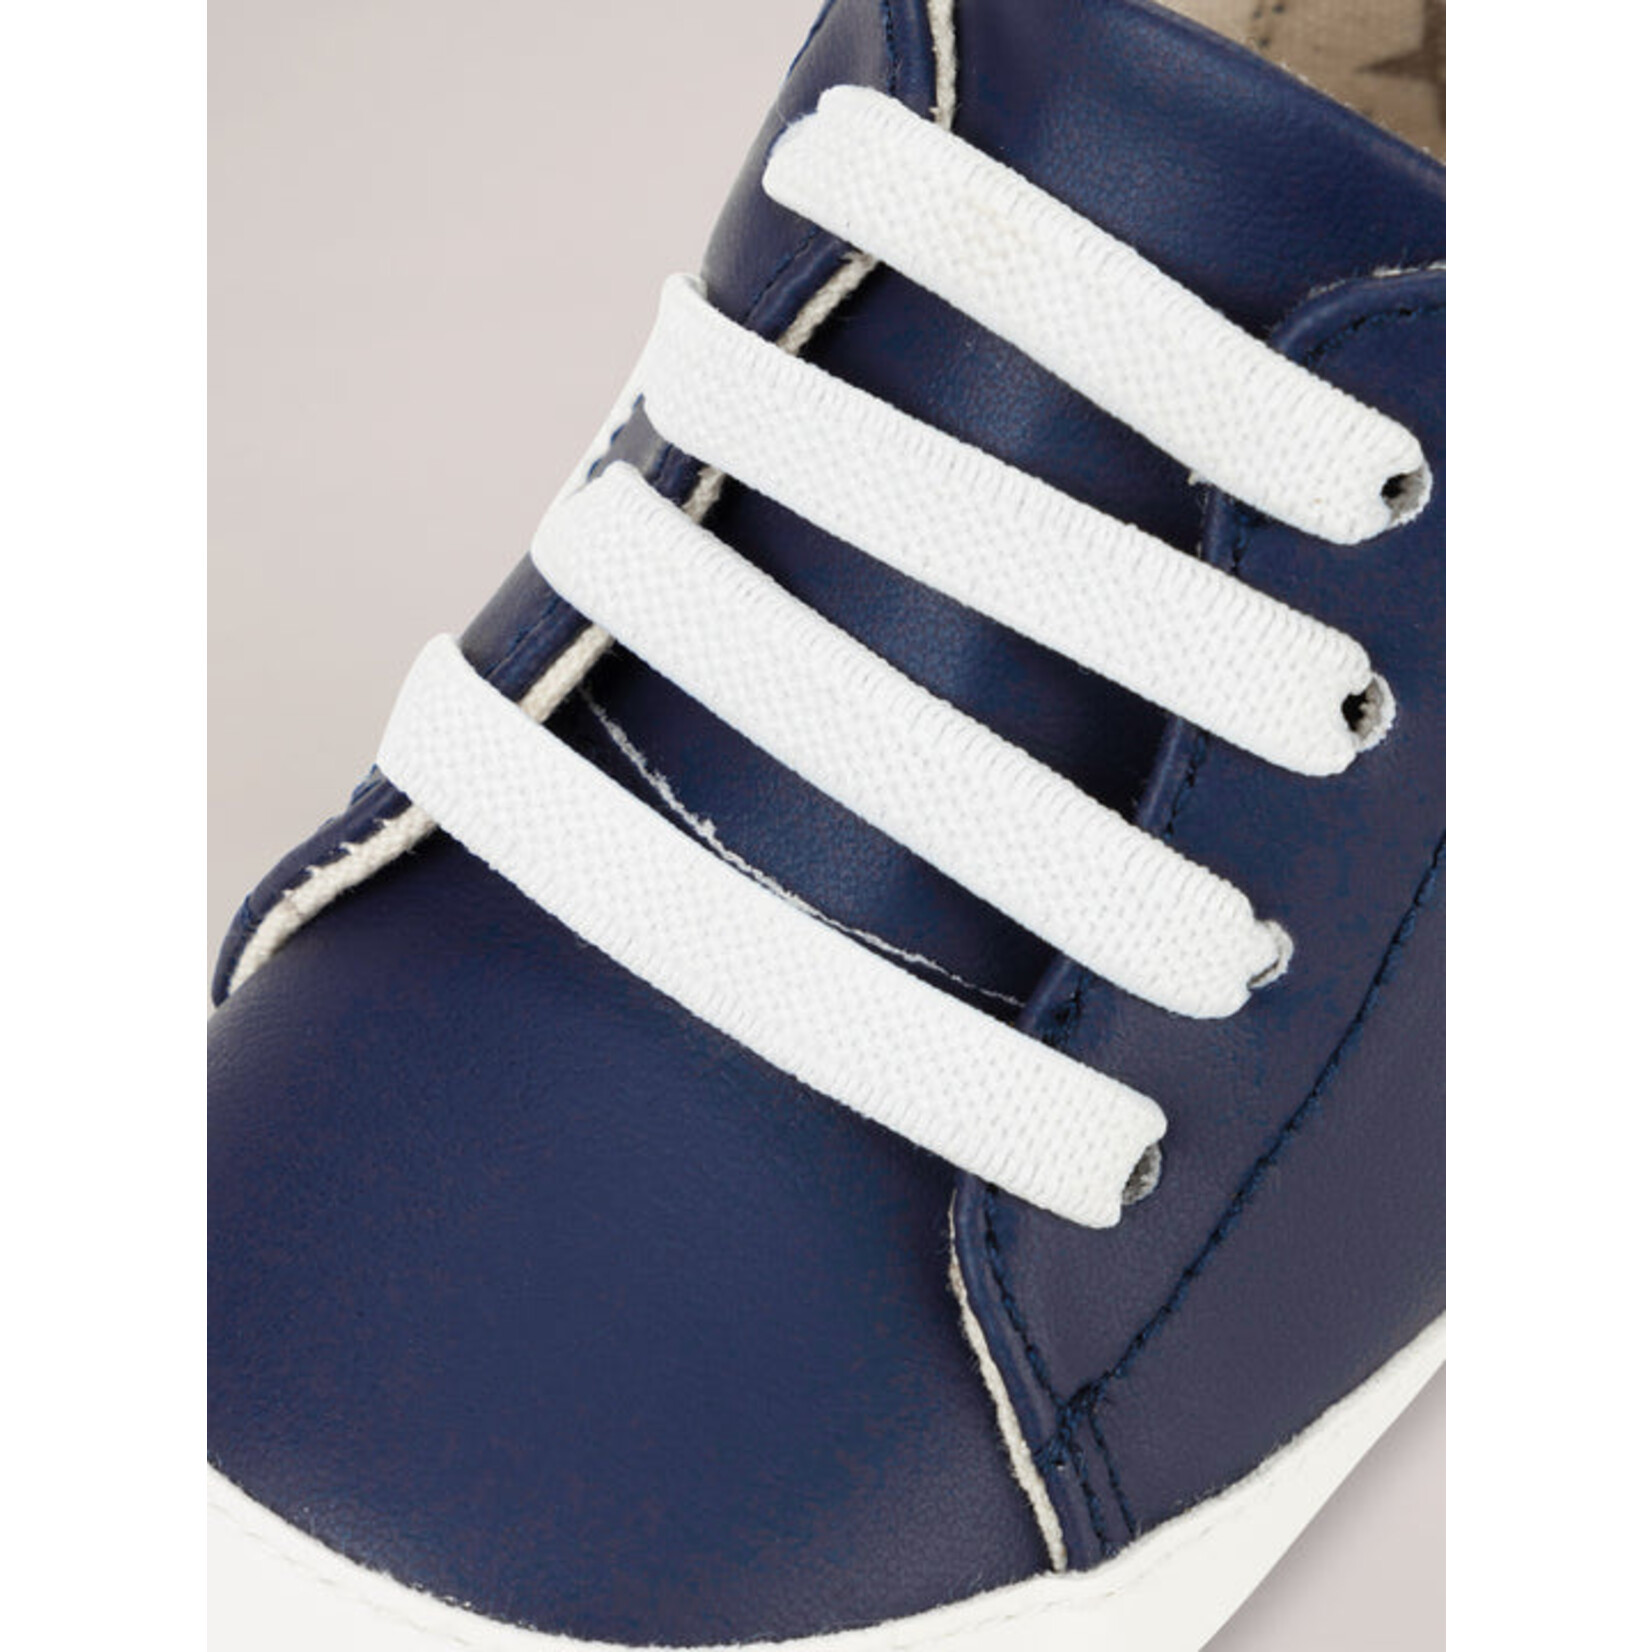 Sneakers : 9-12M in Sailor Blue